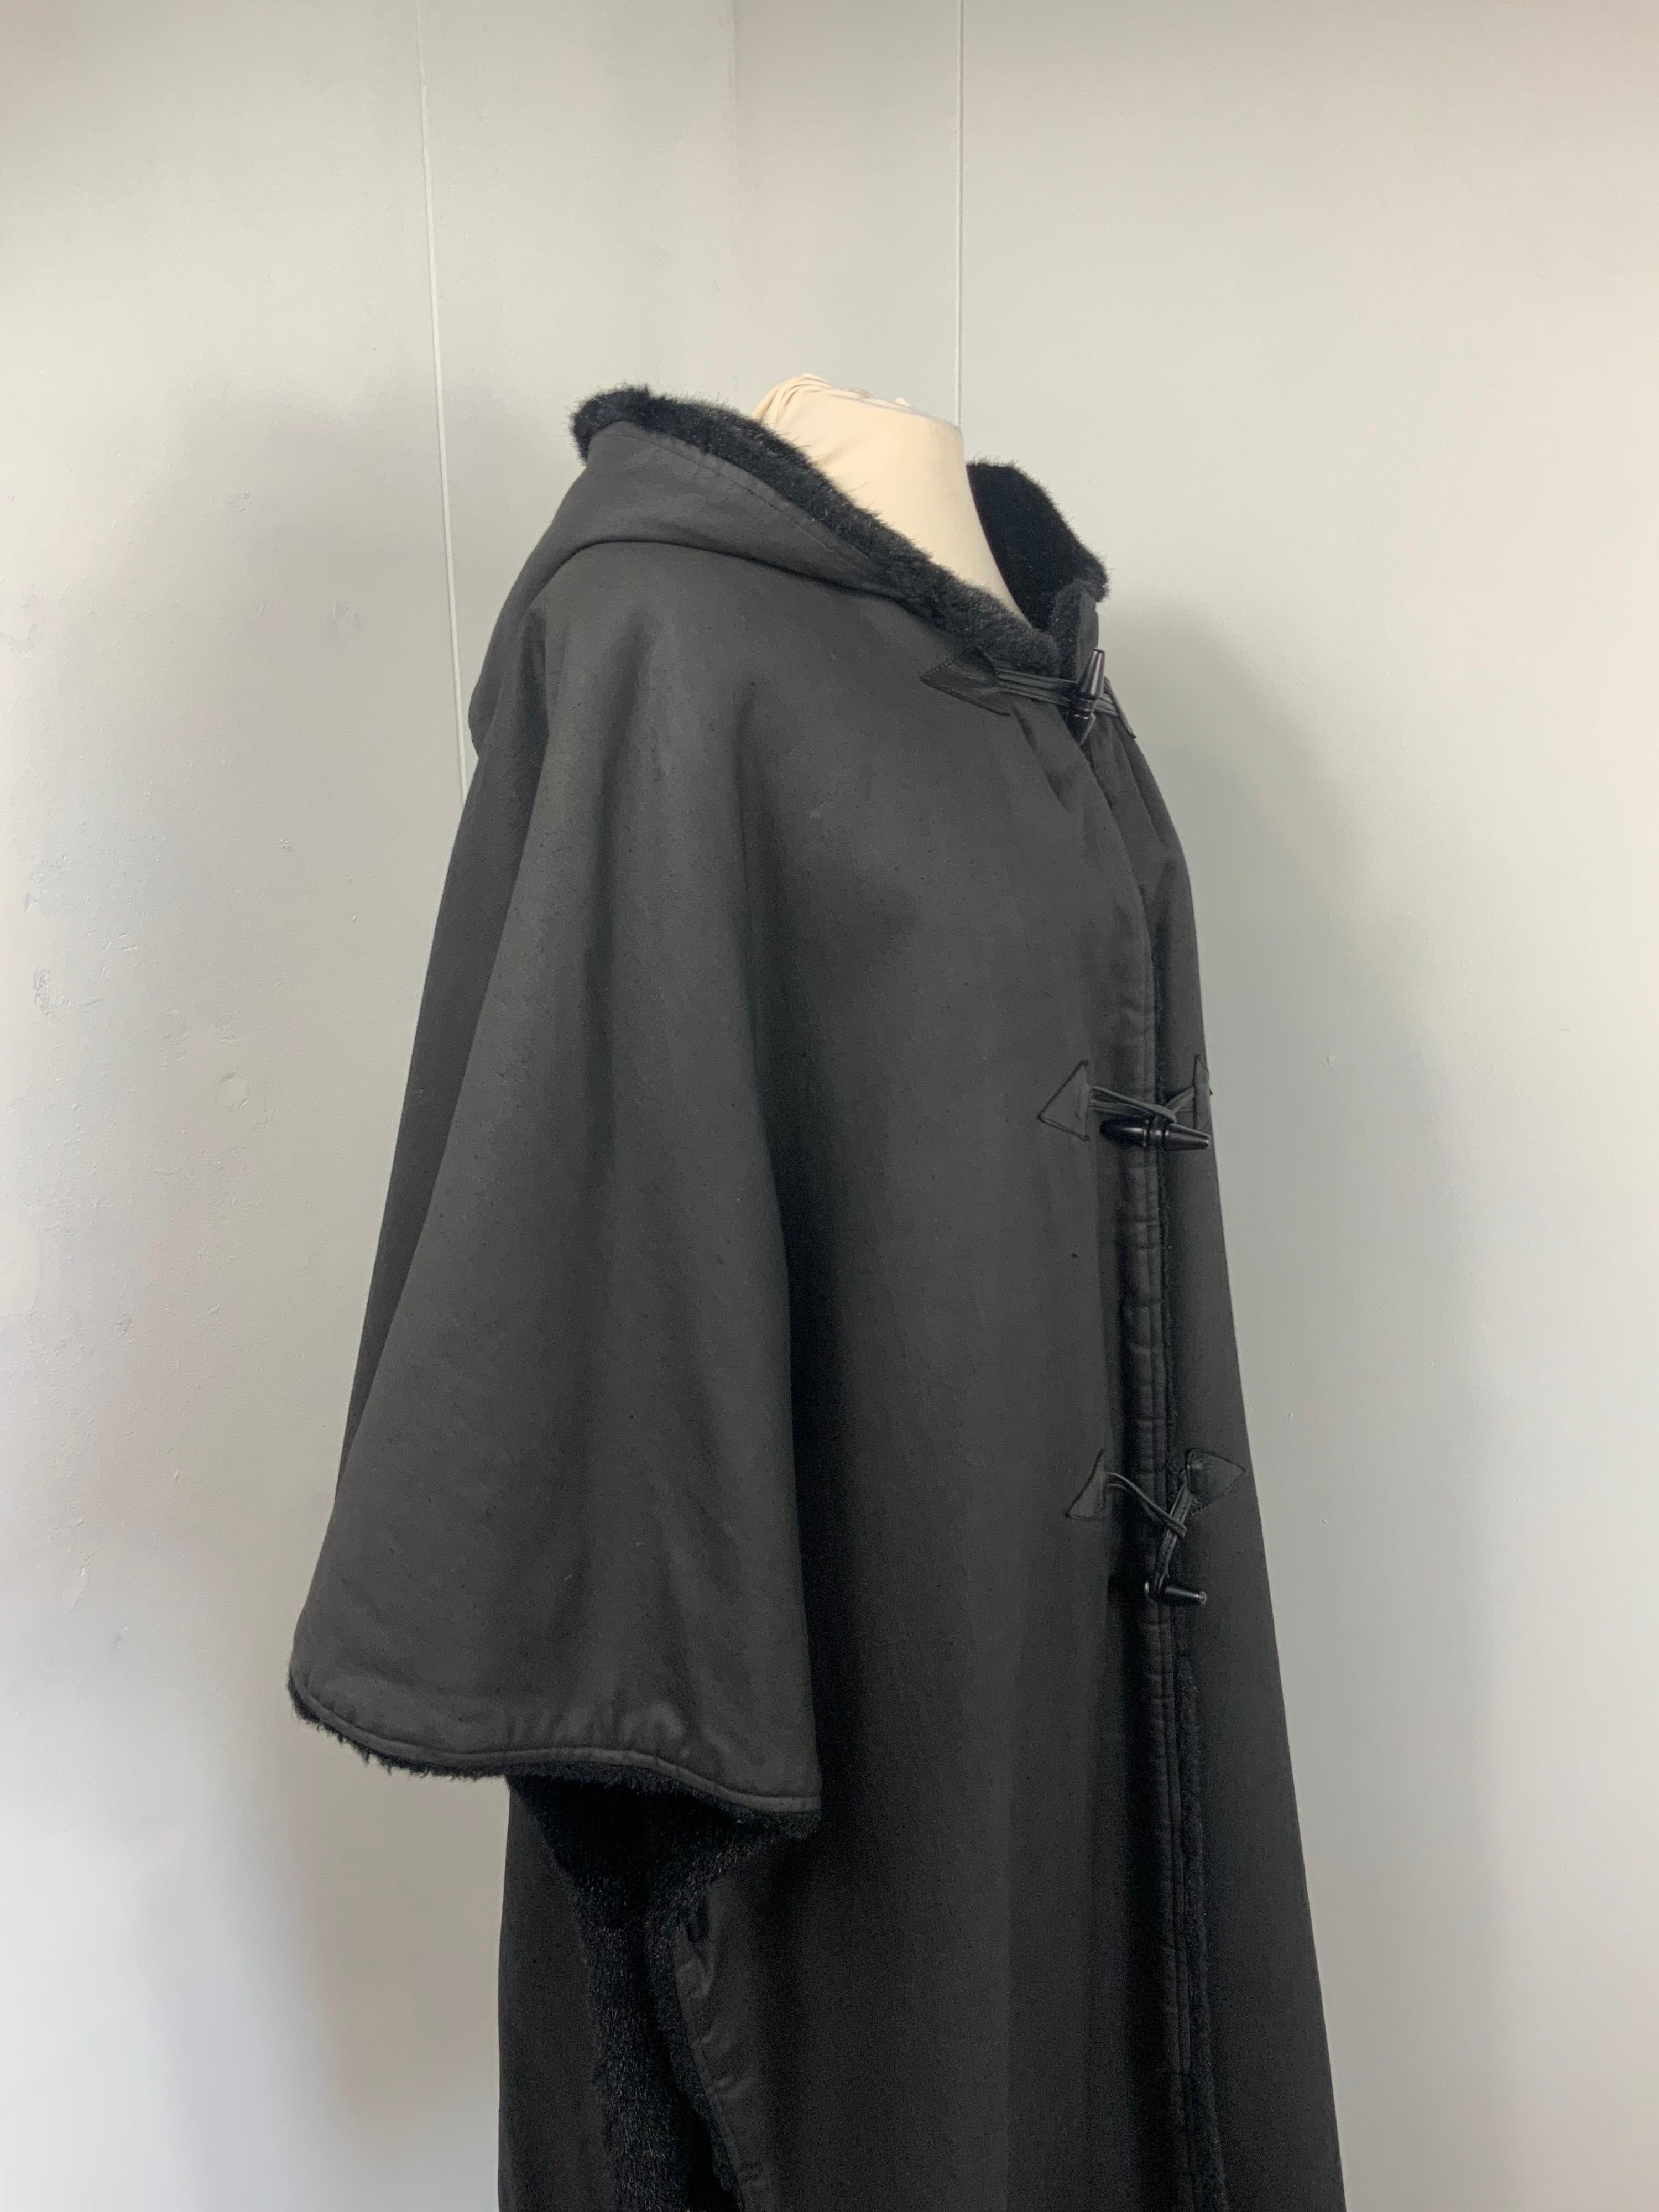 Yves Saint Laurent Variation vintage Cloak In Good Condition For Sale In Carnate, IT